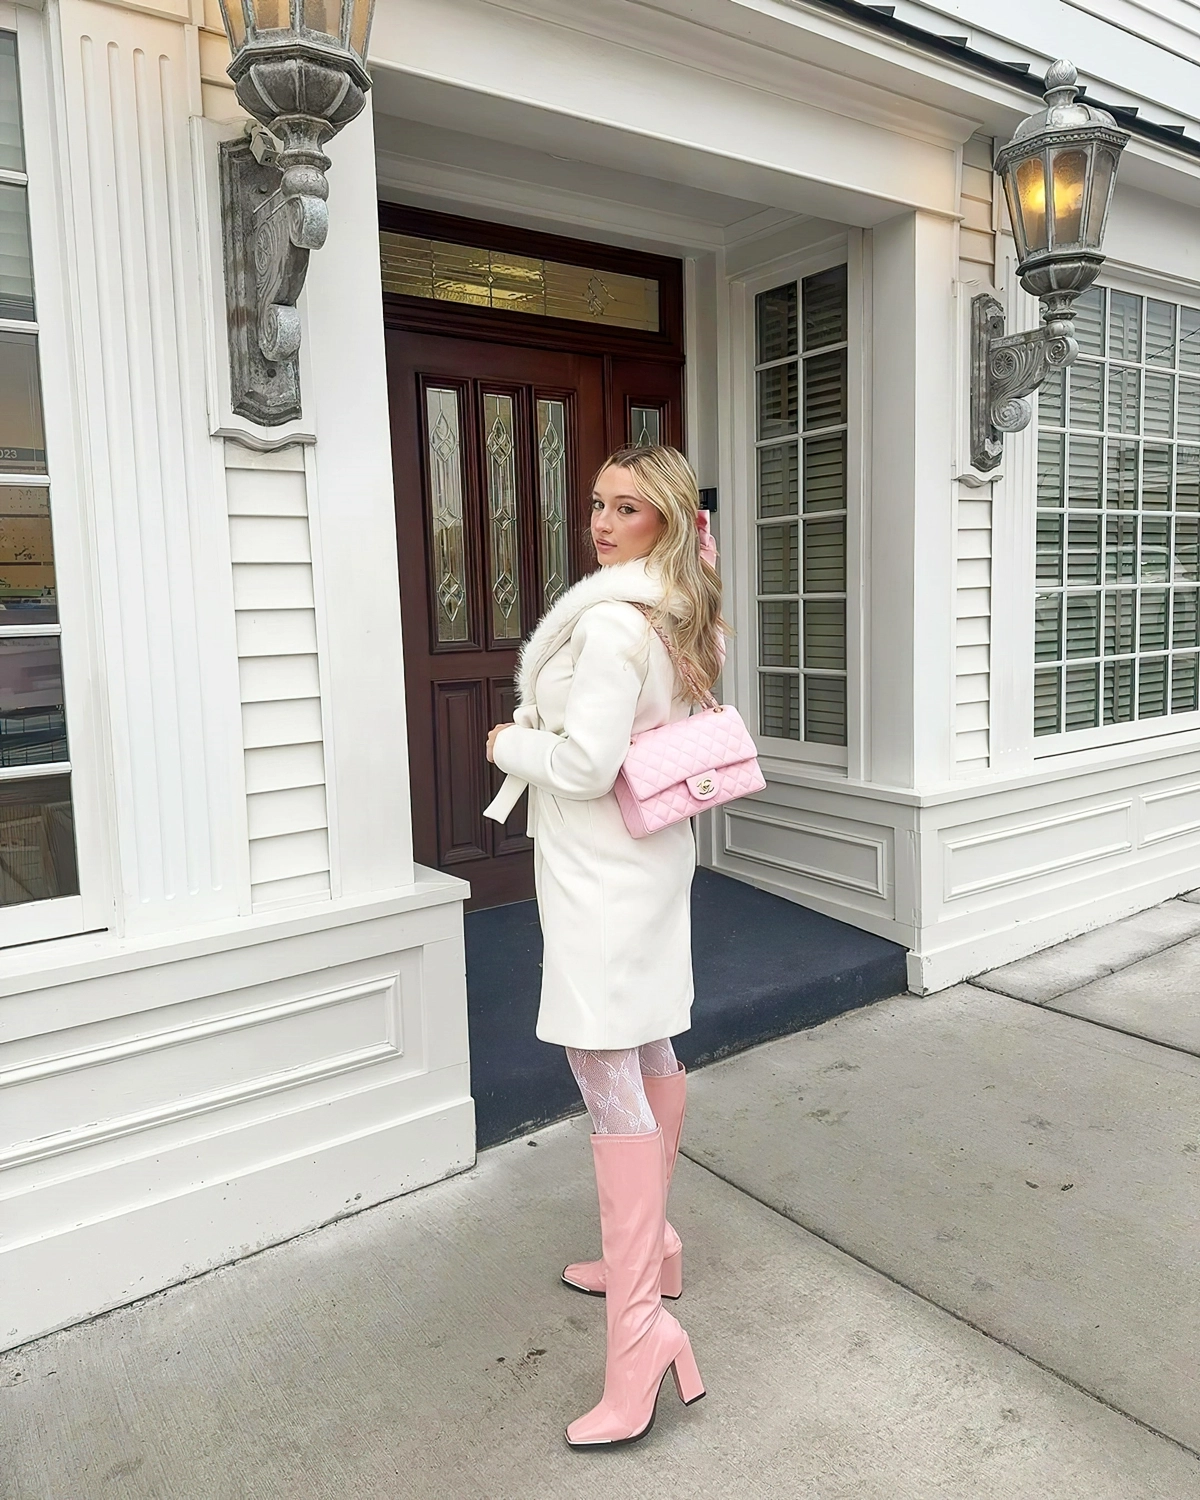 barbie kleidung elegant rosa stiefel weissem mantel fancylikegracie